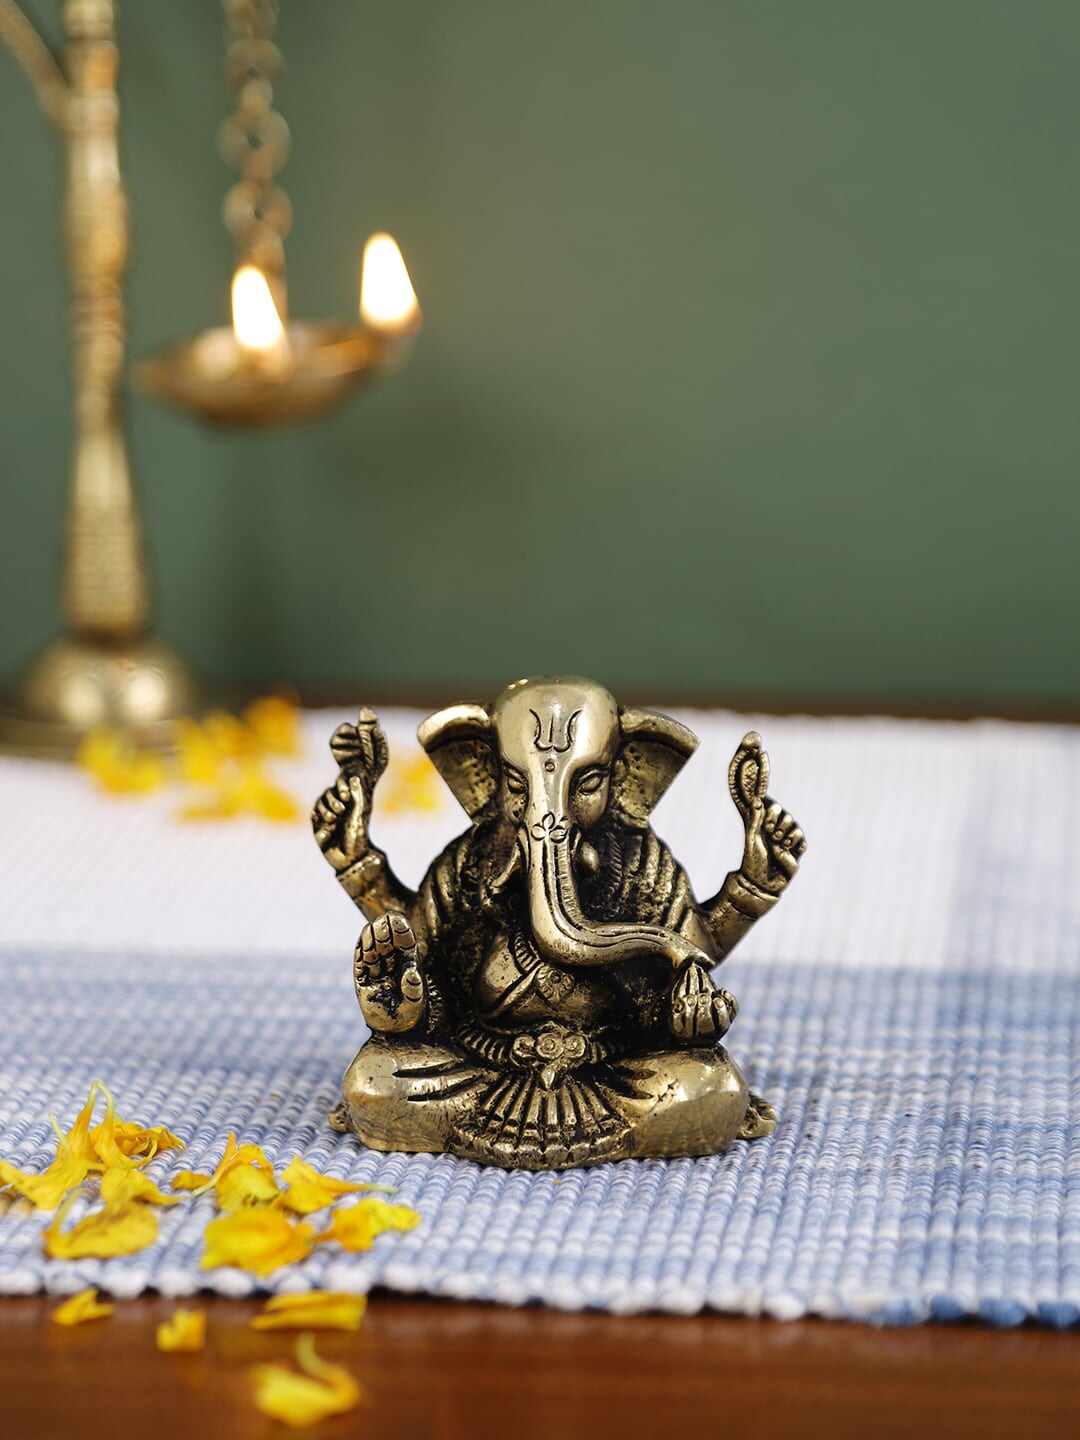 Imli Street Gold-Plated Textured Ganesh 4 Hands Showpiece Price in India